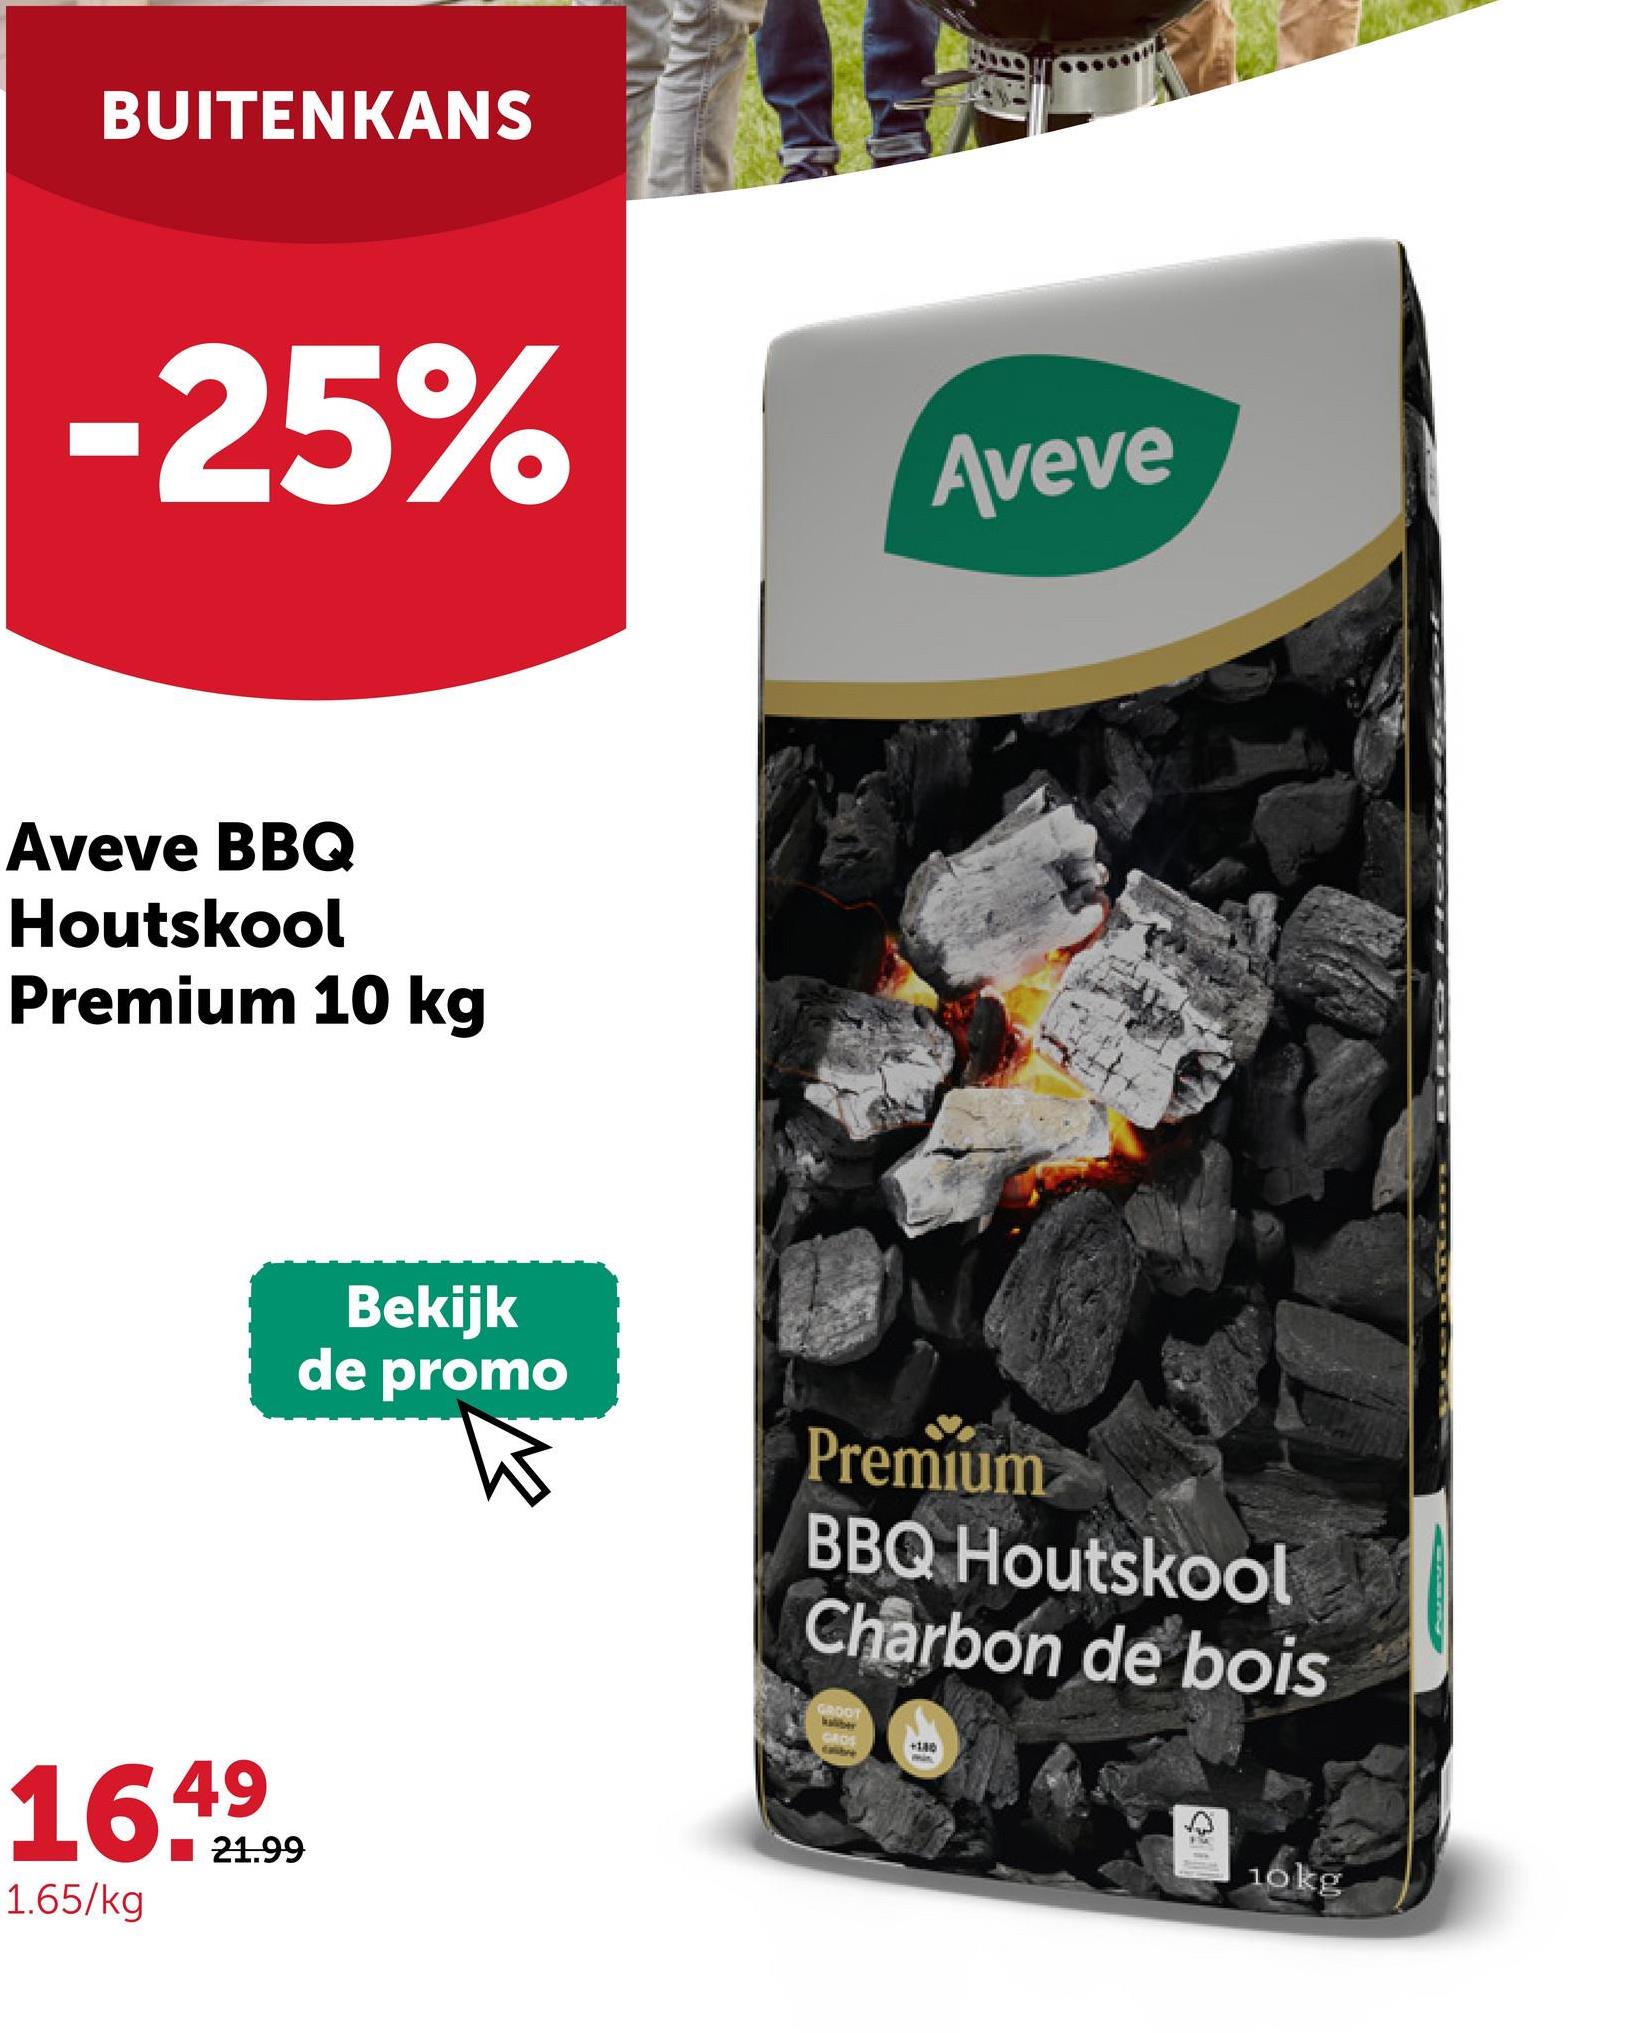 BUITENKANS
-25%
Aveve BBQ
Houtskool
Premium 10 kg
Aveve
Bekijk
de promo
W
Premium
BBQ Houtskool
Charbon de bois
16.4999
1.65/kg
GROOT
+180
Min
بی
10kg